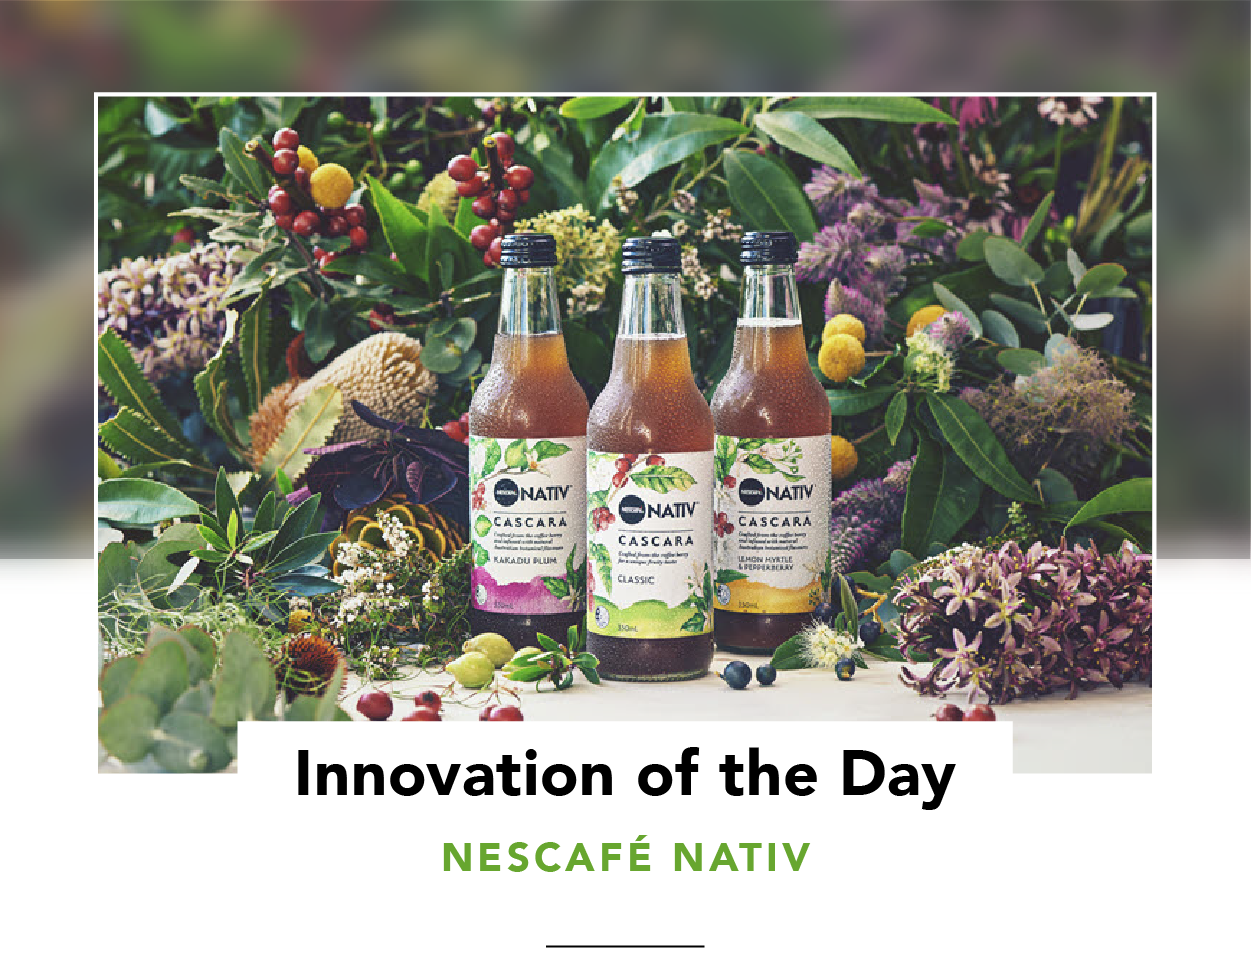 Three bottles of NESCAFÉ NATIV in a lush vegetative setting